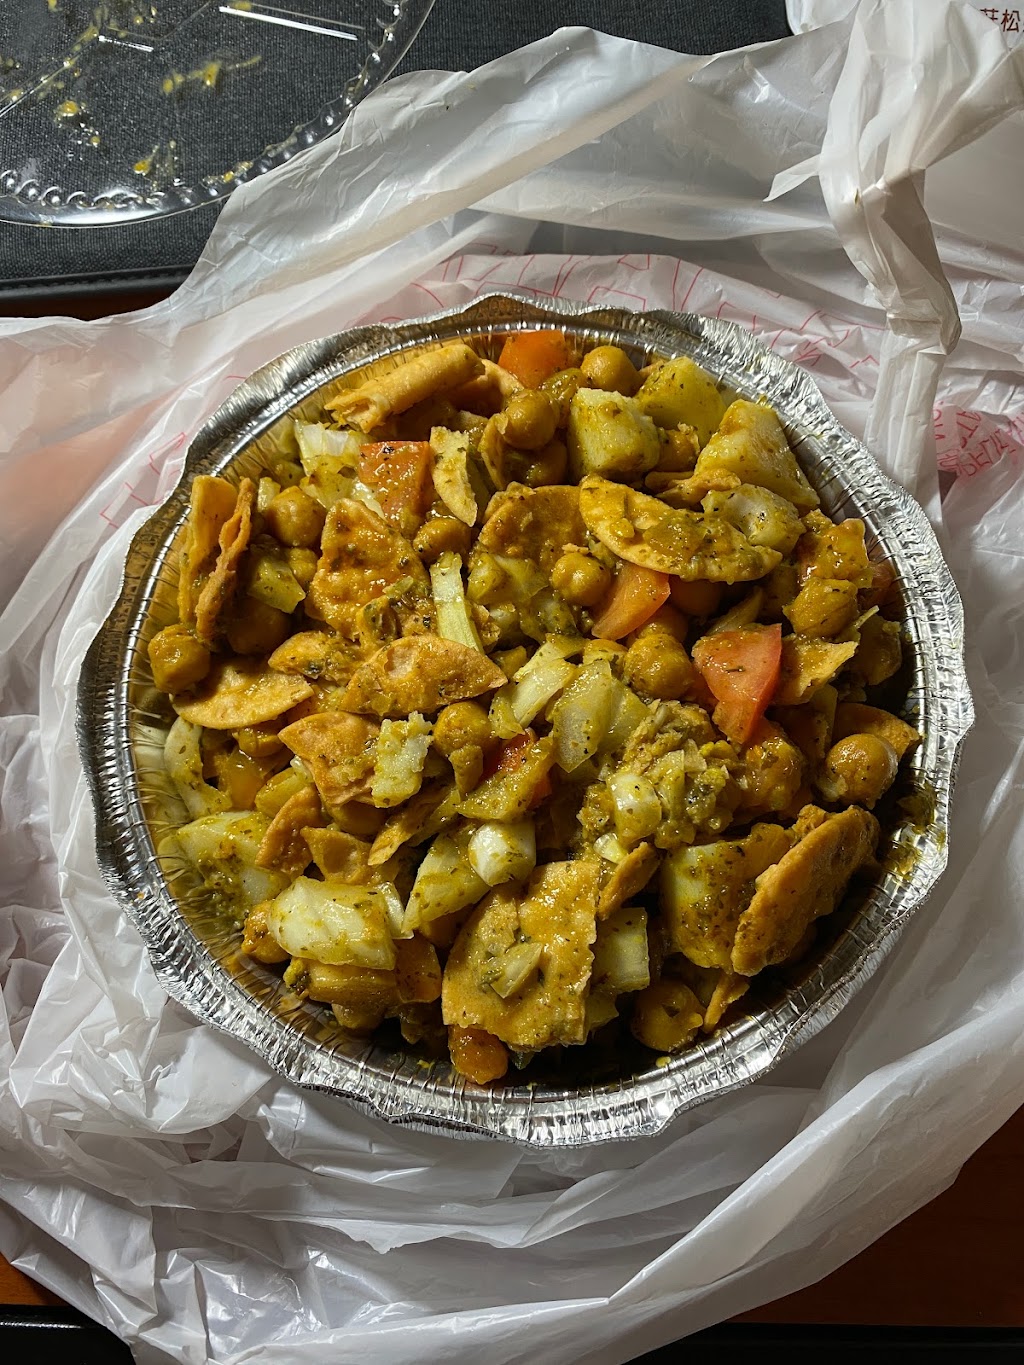 Dev’s Indian street food | 1010 W Montgomery Ave, Philadelphia, PA 19122 | Phone: (267) 678-9310